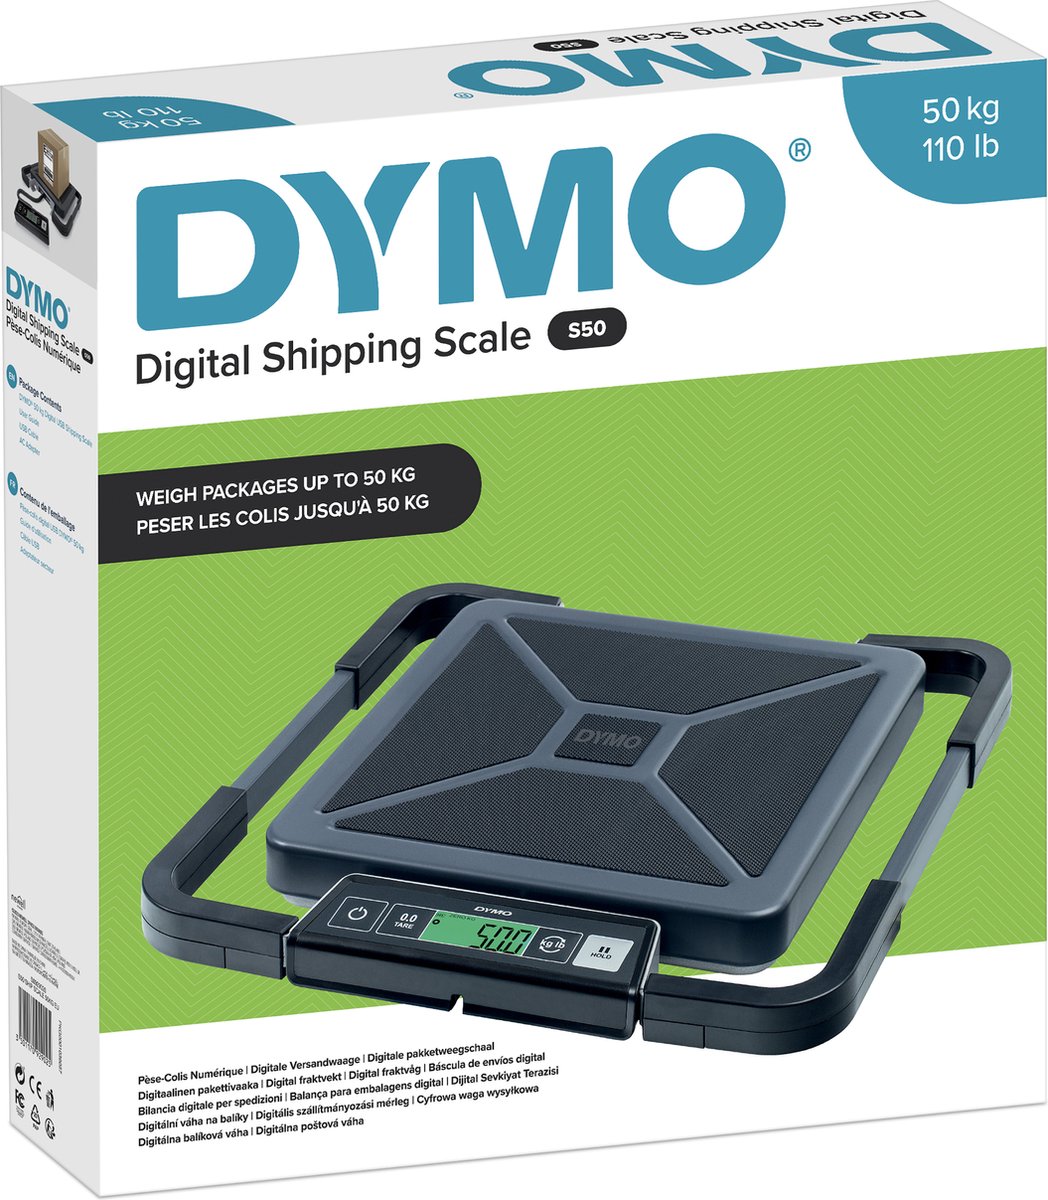 DYMO S50 digitale postweegschalen | tot 50 kg capaciteit | heavy-duty pakket- en verzendweegschaal - DYMO